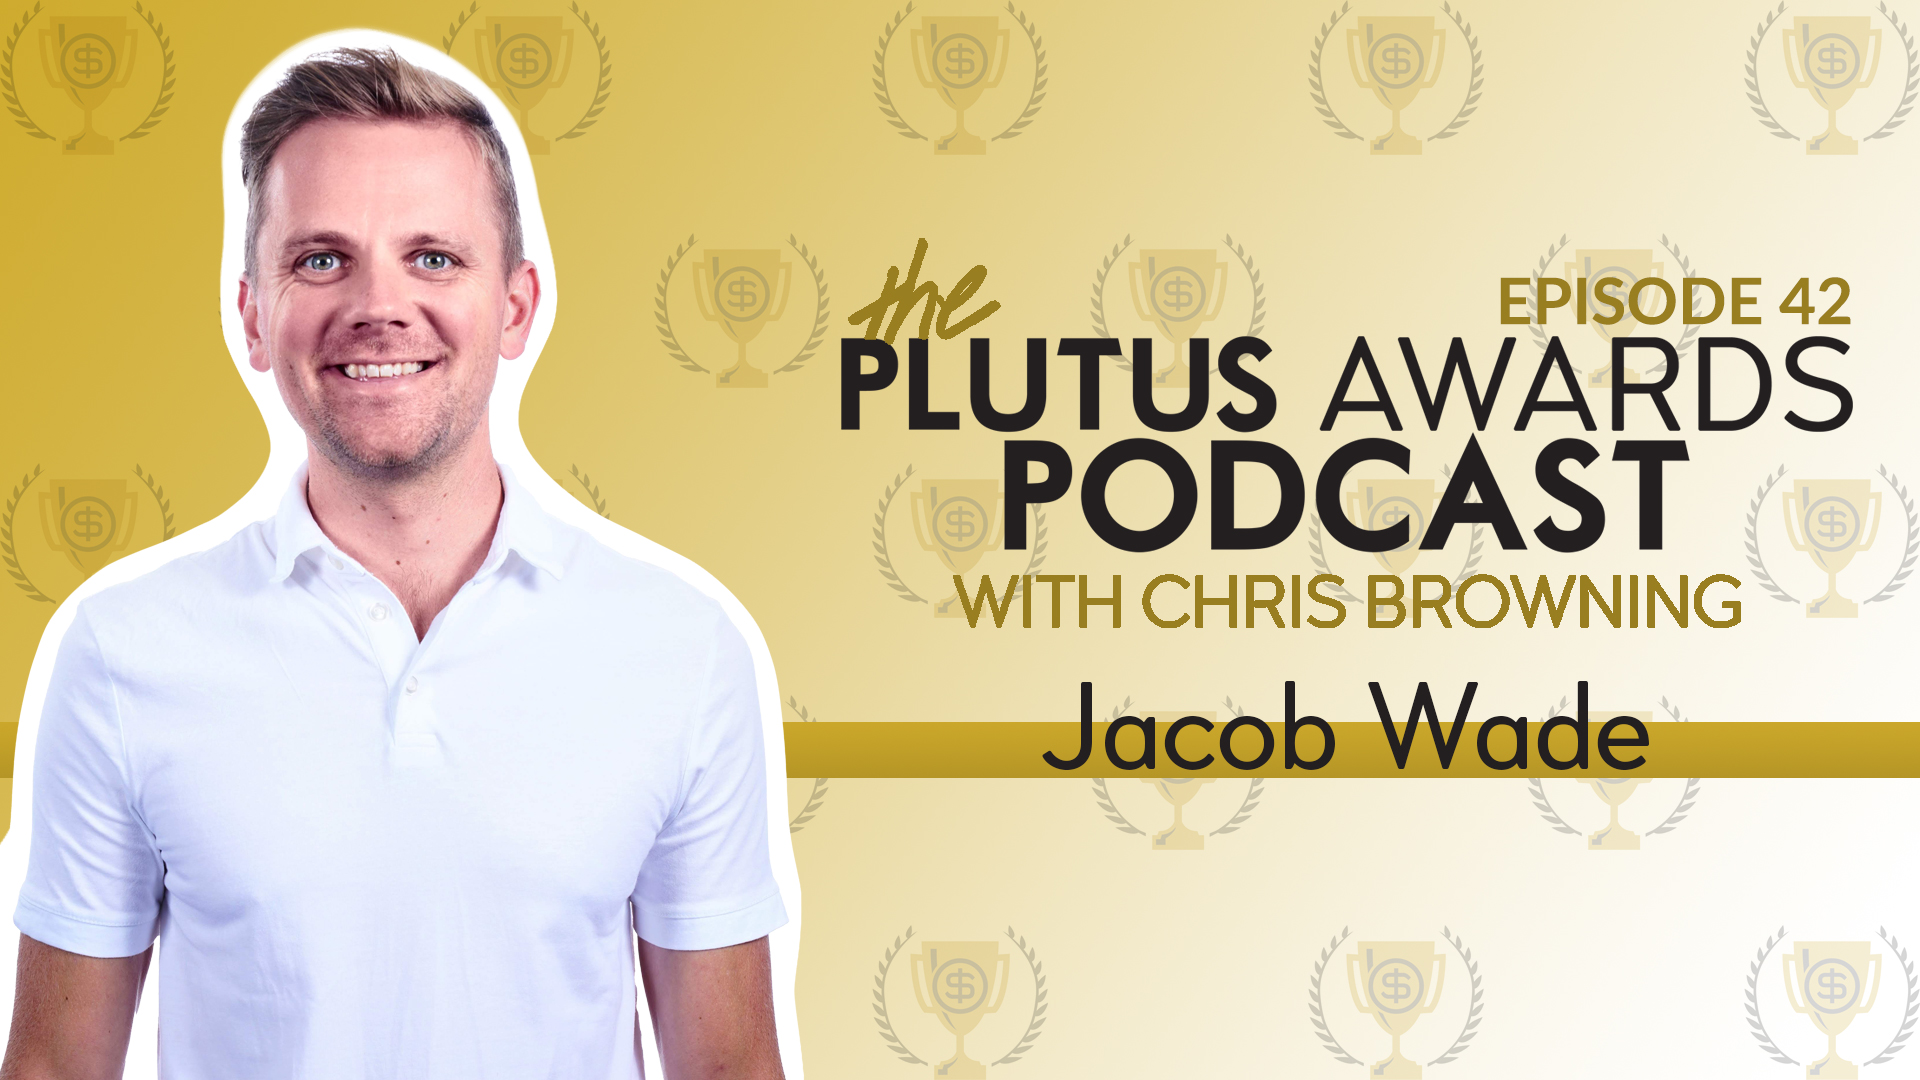 Plutus Awards Podcast Jacob Wade Featured Image